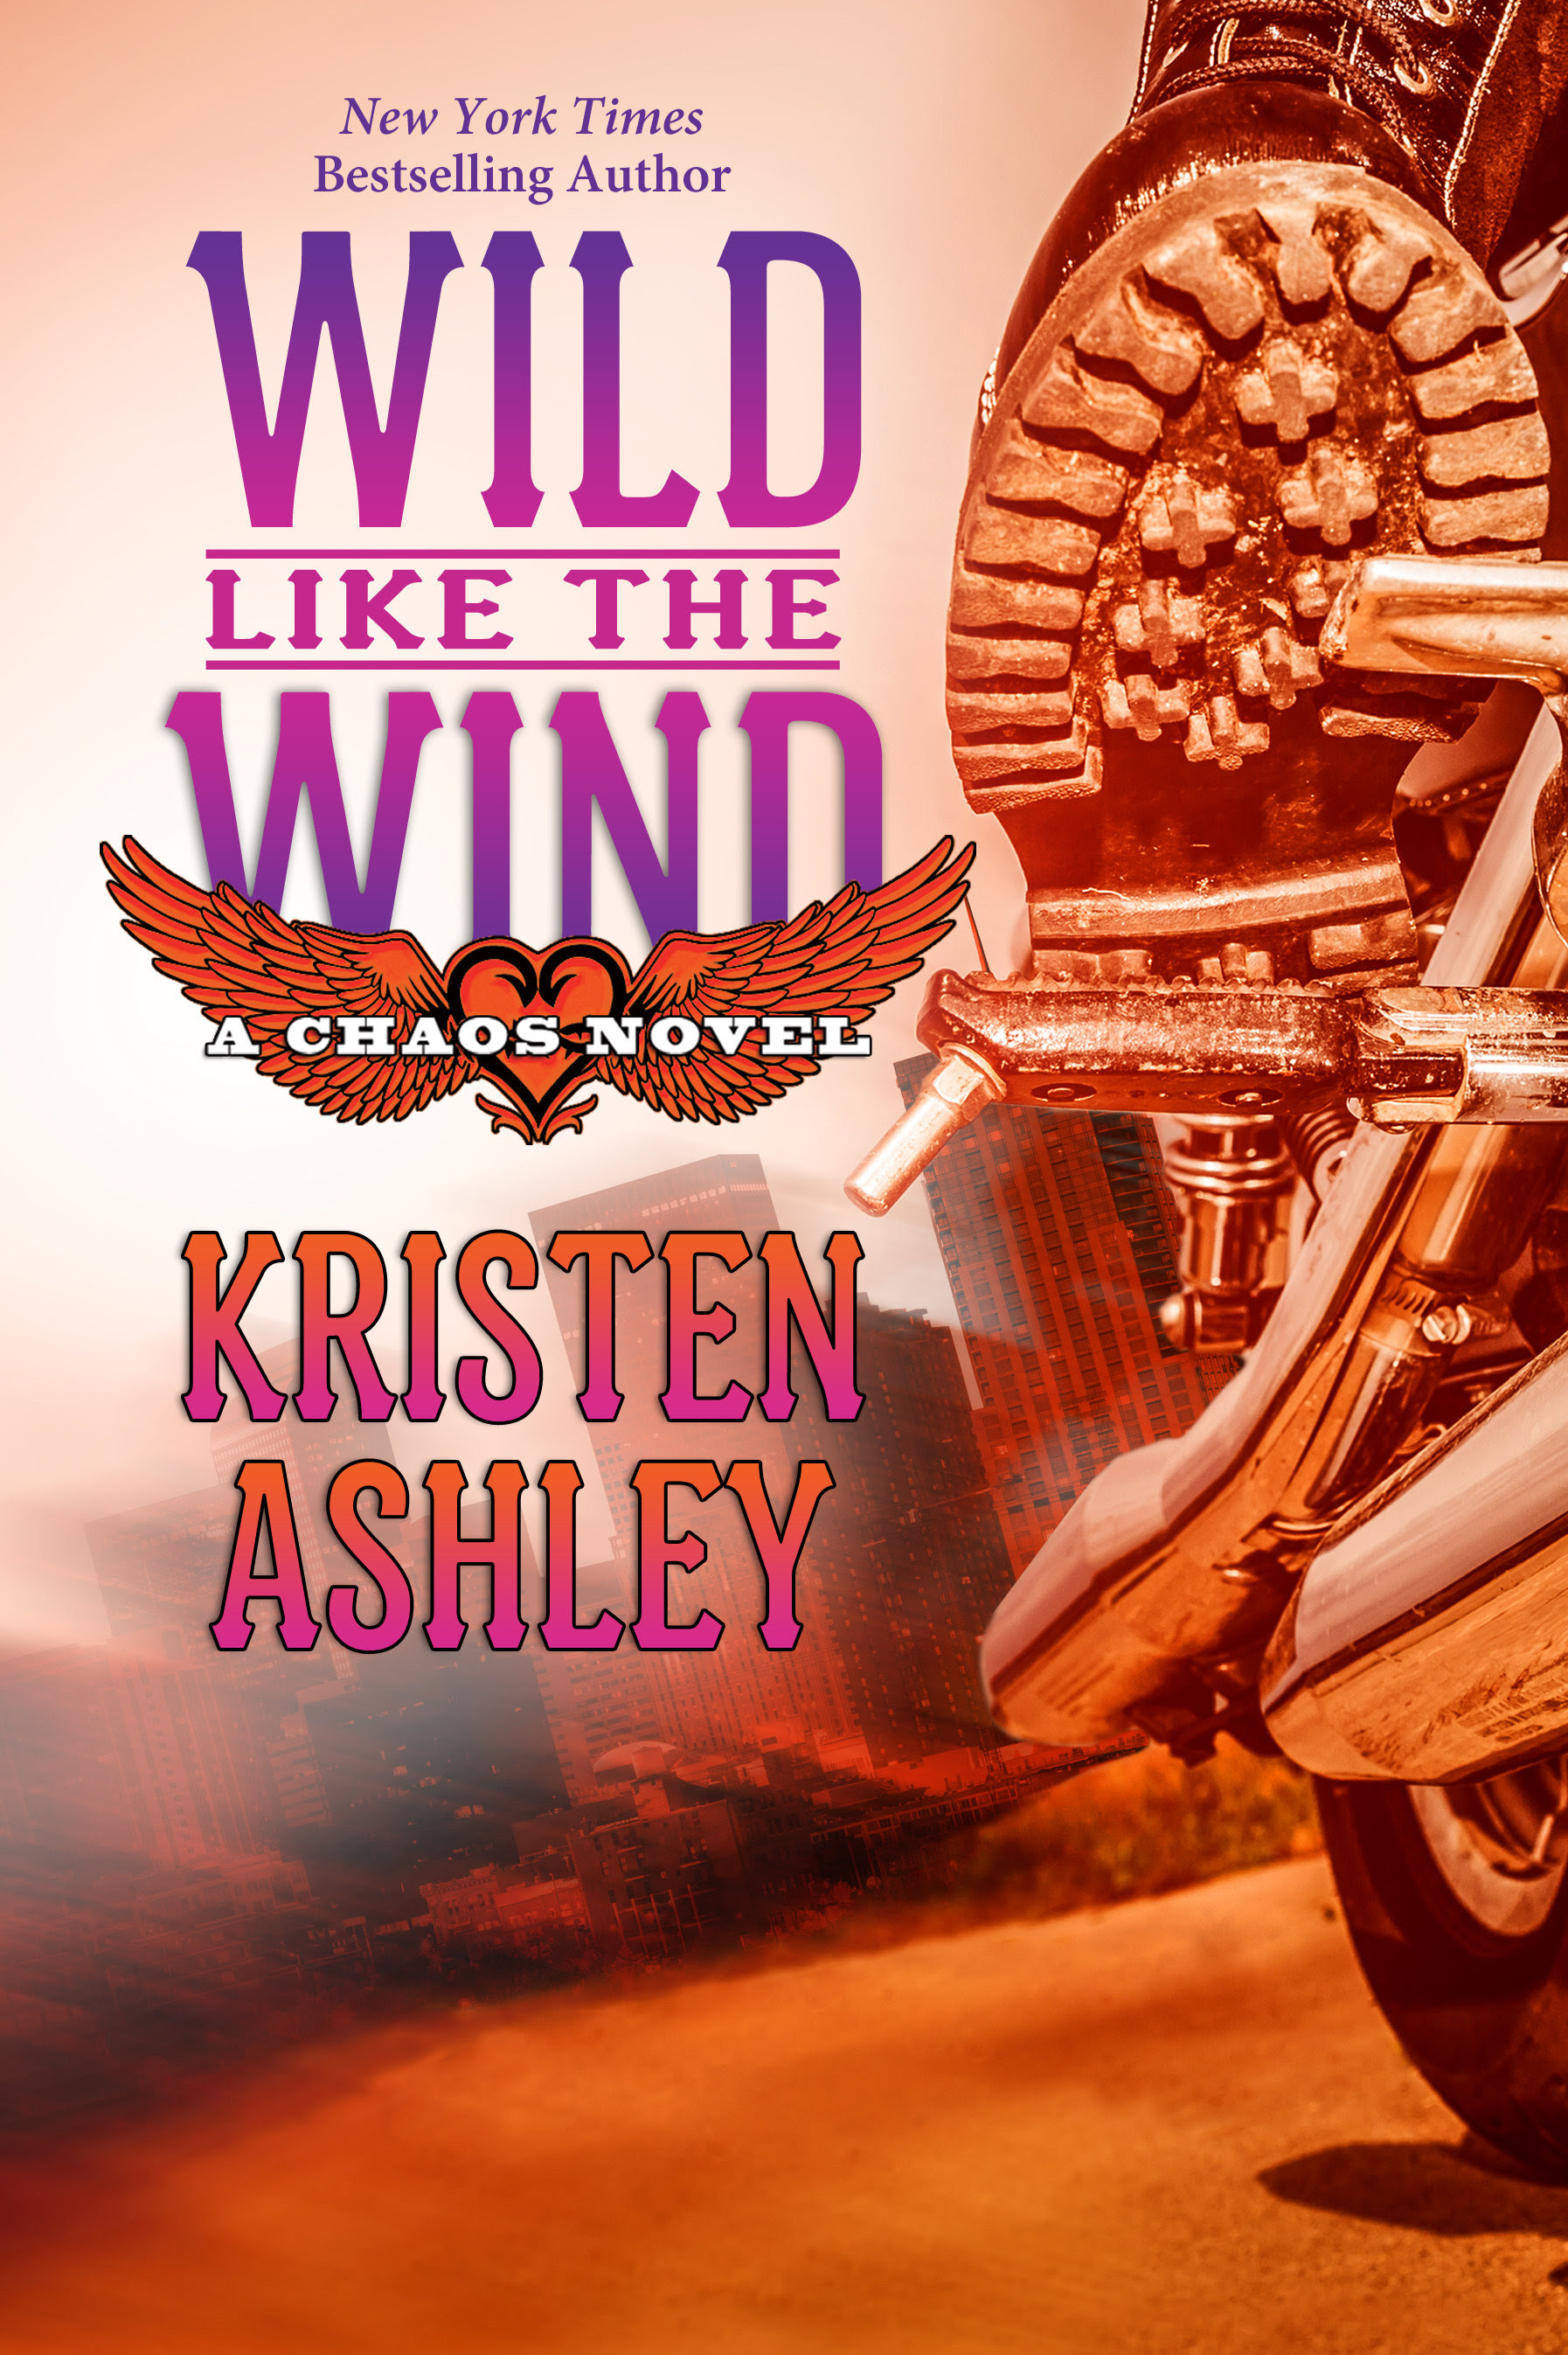 Chaos - Tome 5 : Wild like the wind de Kristen Ashley A64a21a2-137a-4a9d-80d6-75215797acf4